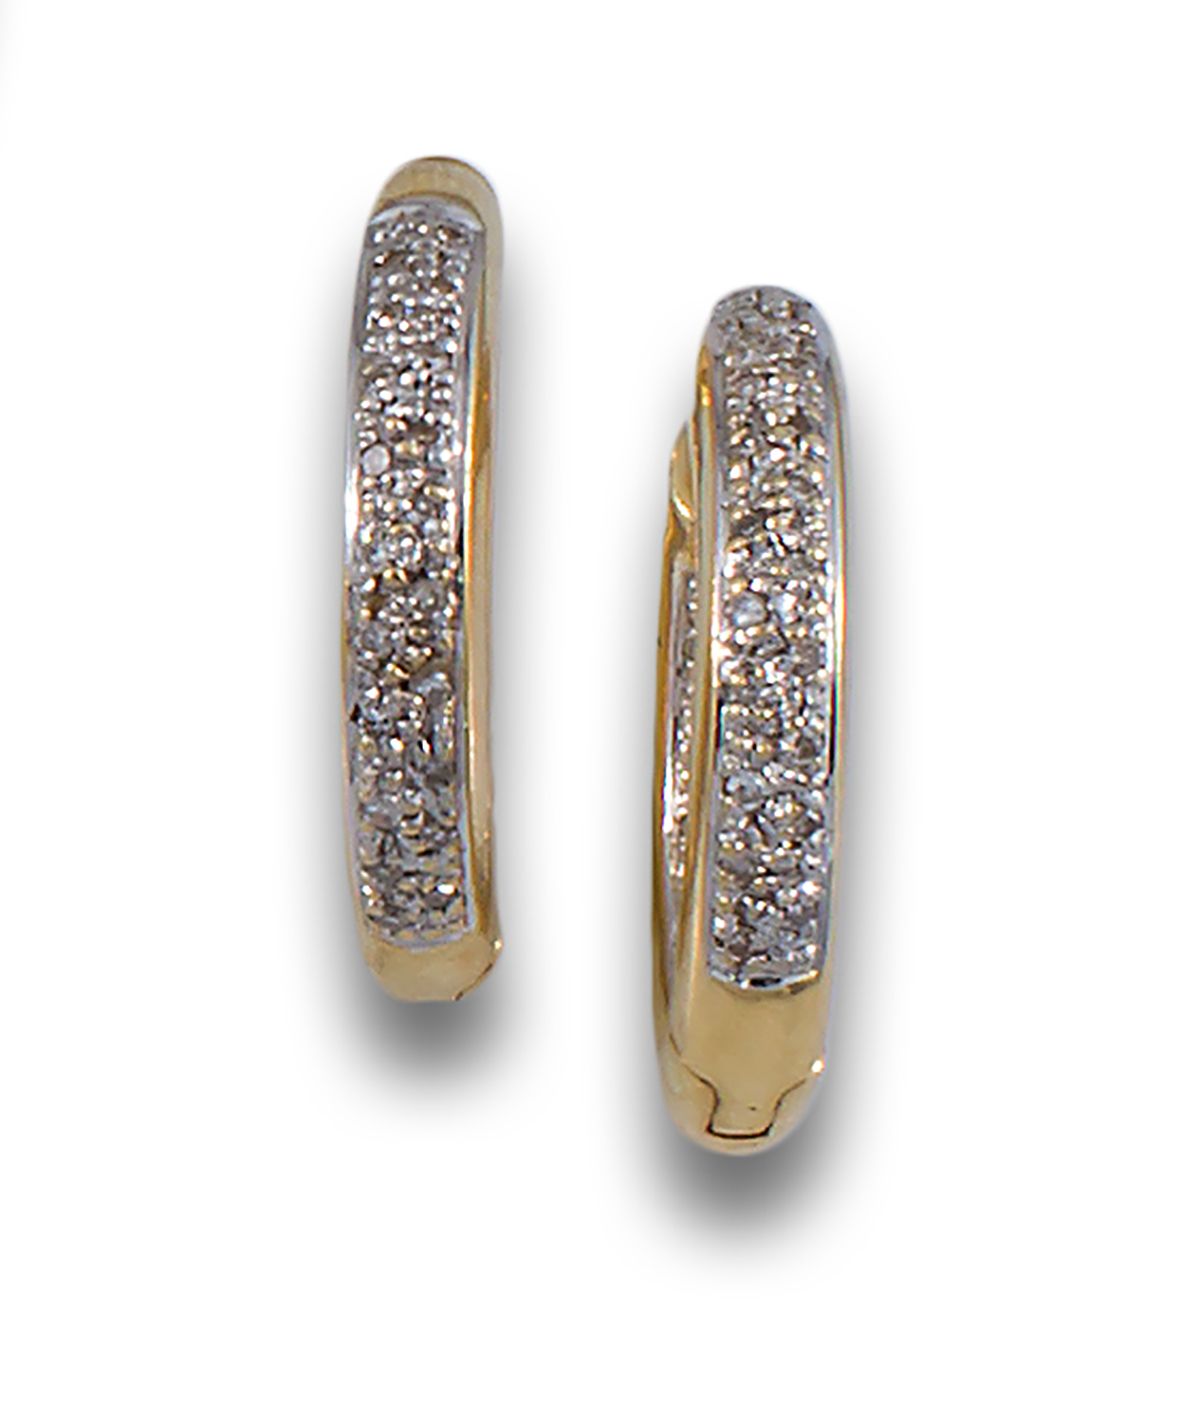 TWO GOLD DIAMOND RINGS 镶嵌明亮式切割钻石的18K黄金和白金戒指 .